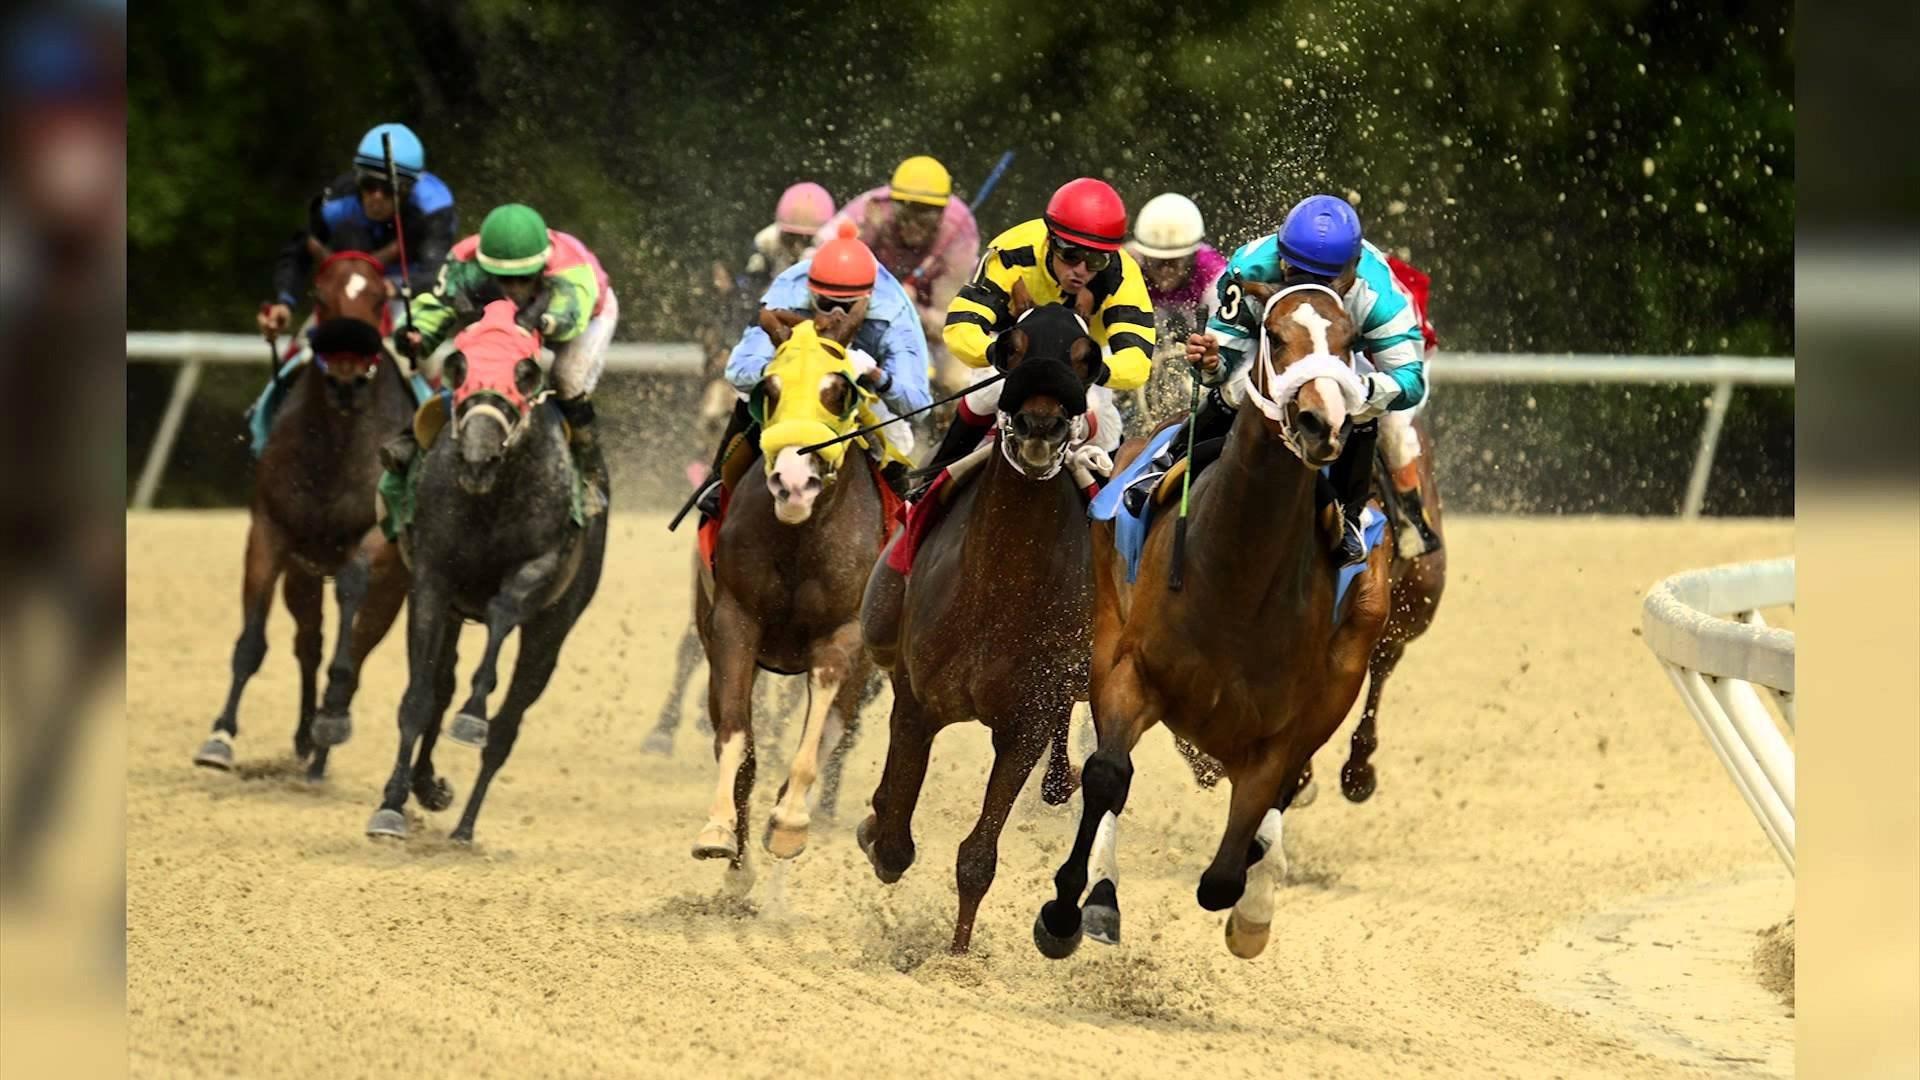 Wallpaper for Desktop: horse racing image